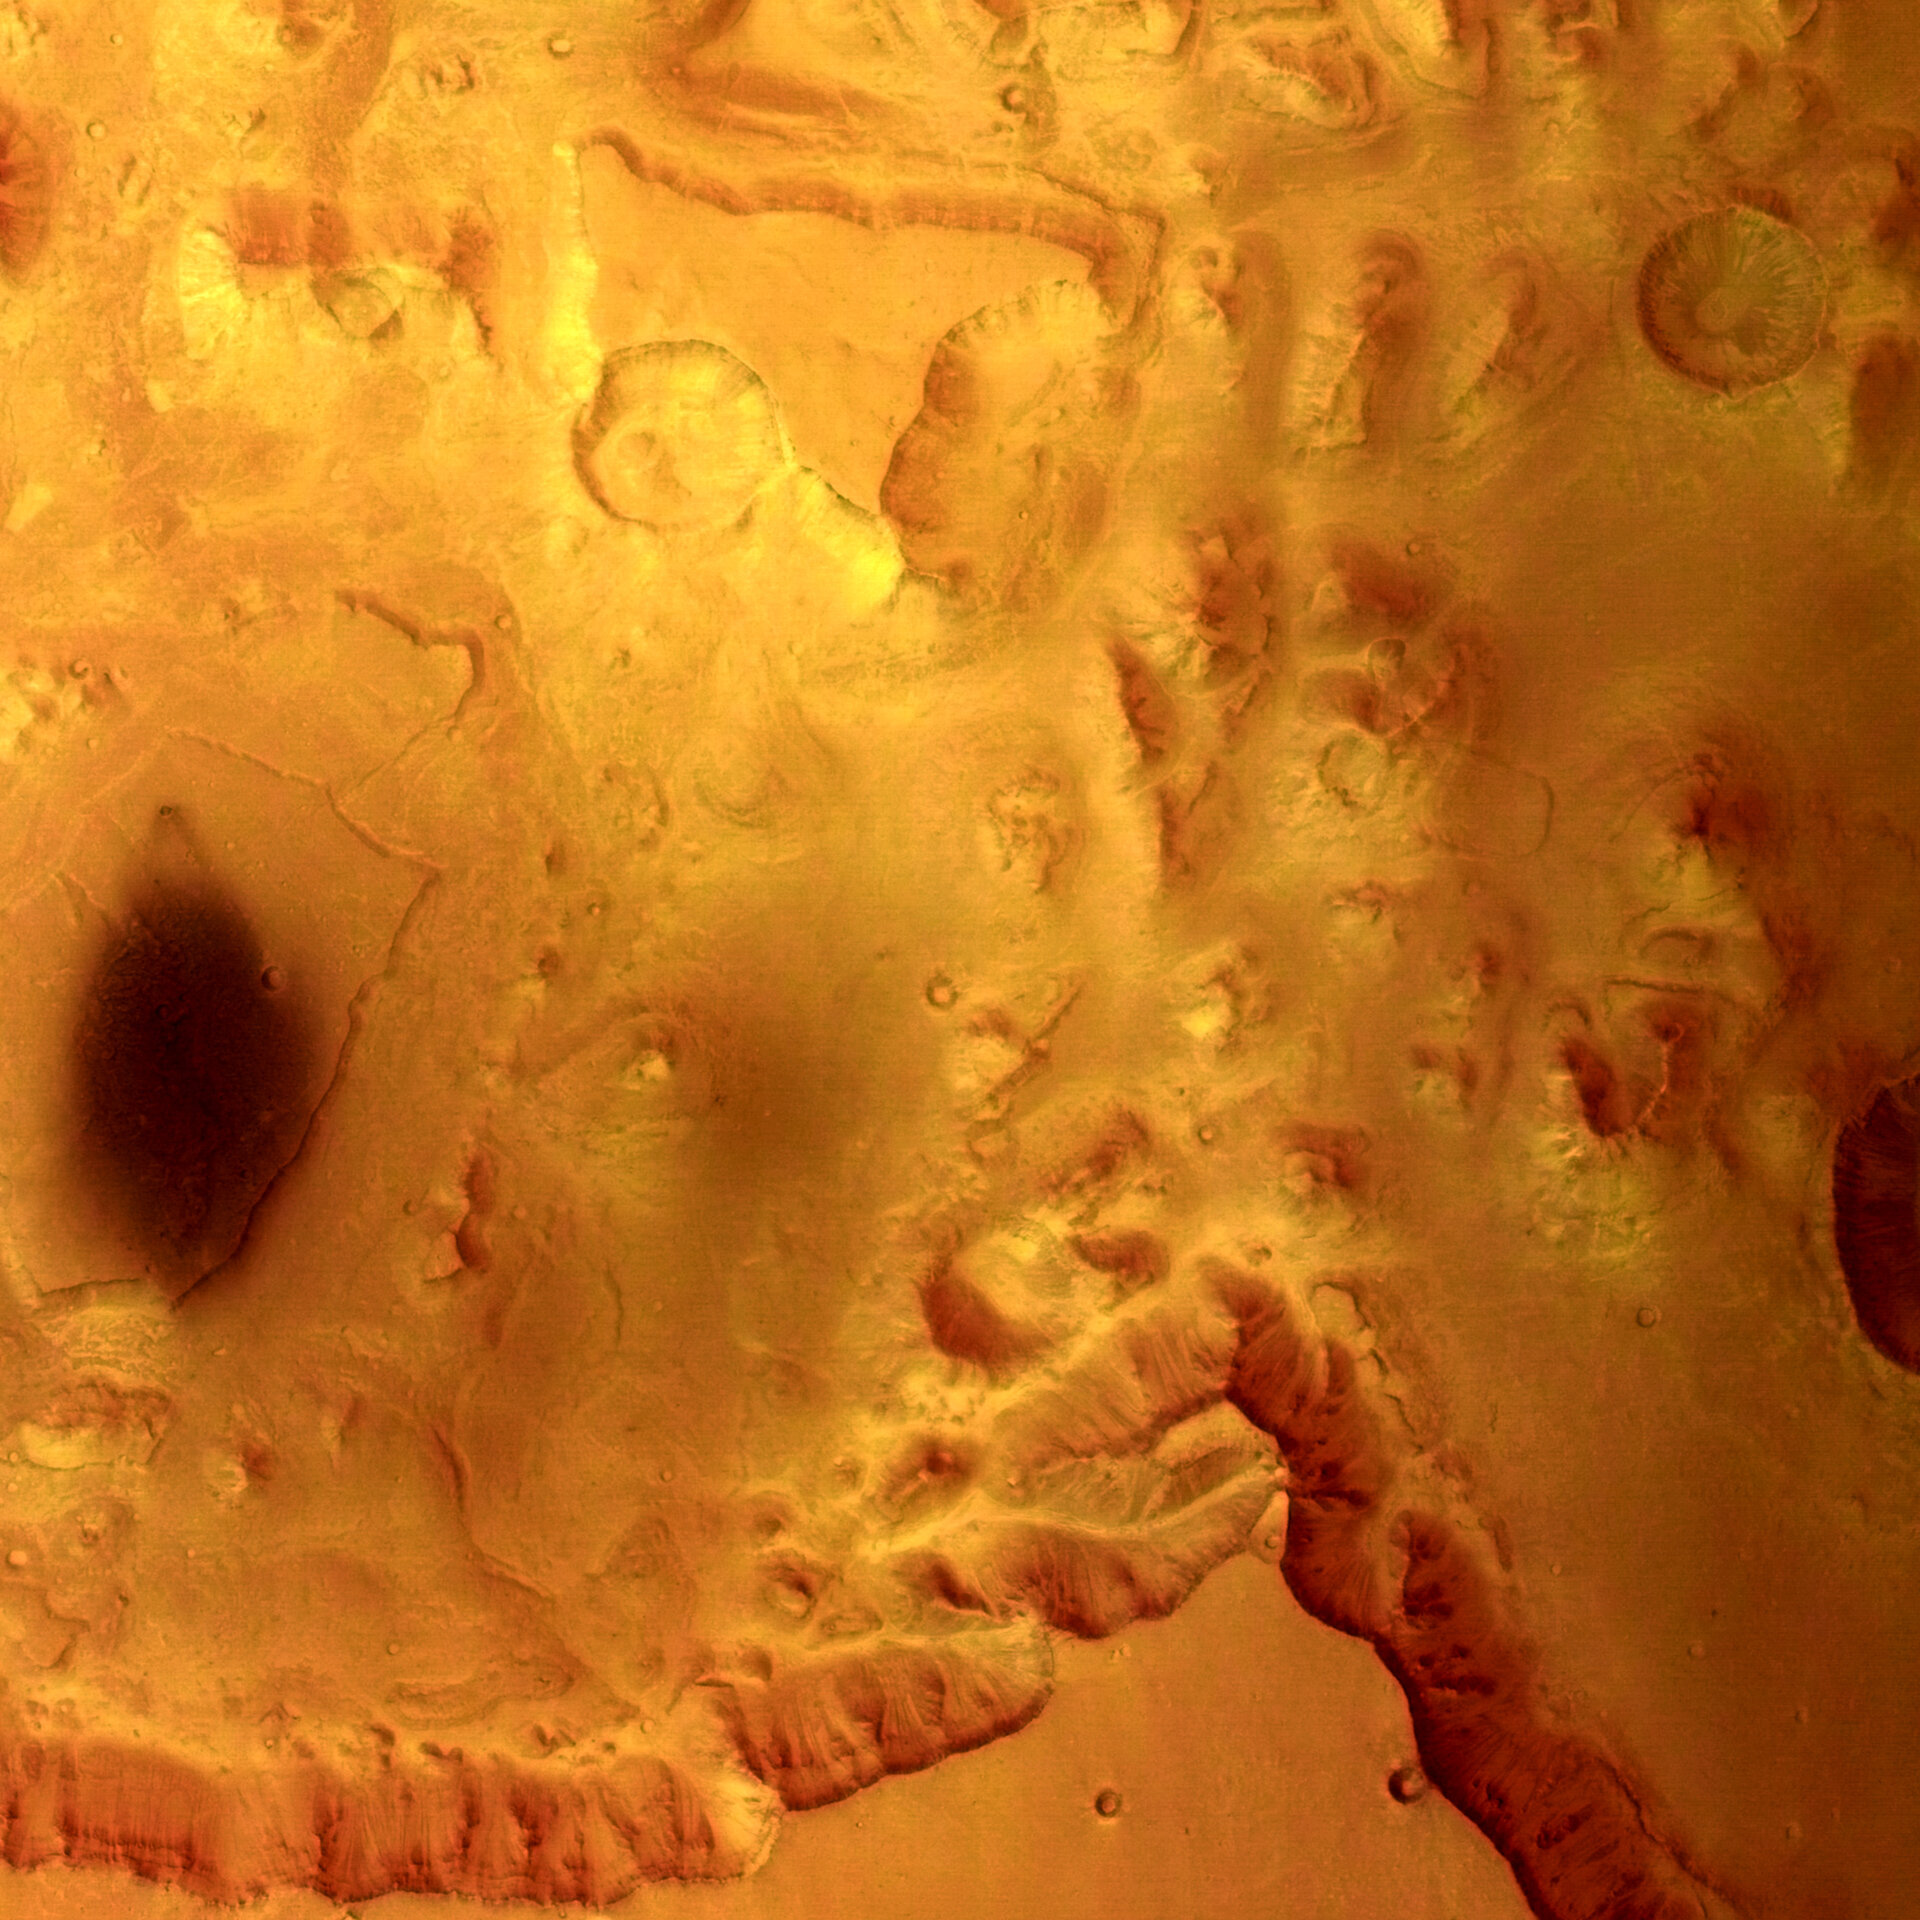 Valles Marineris - HRSC image 14 January 2004